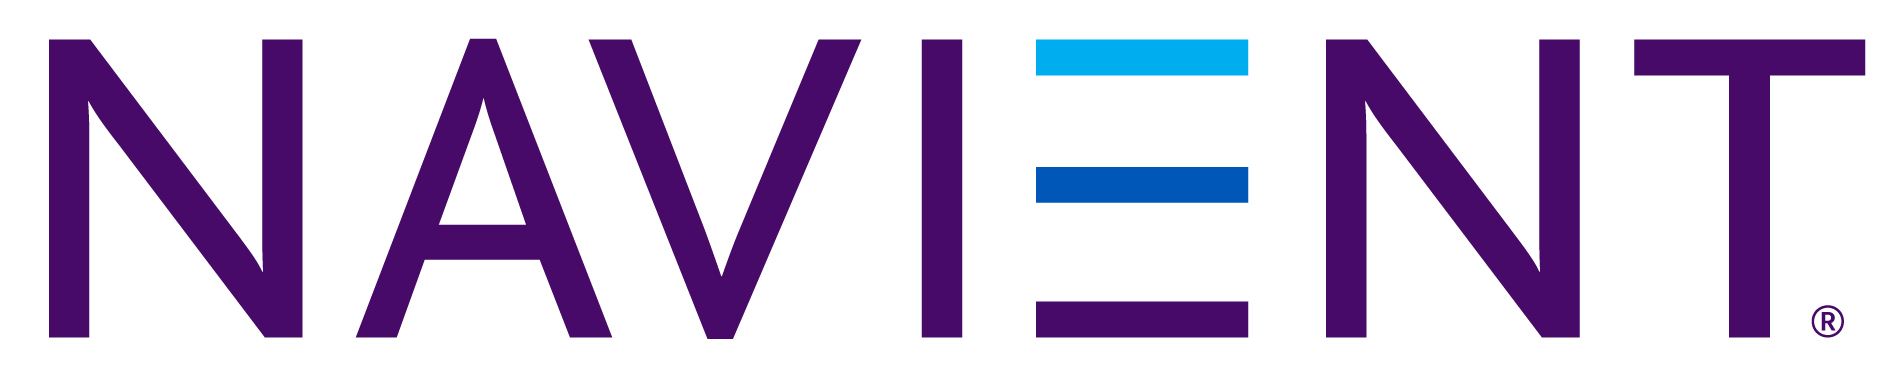 Navient Muncie HW logo